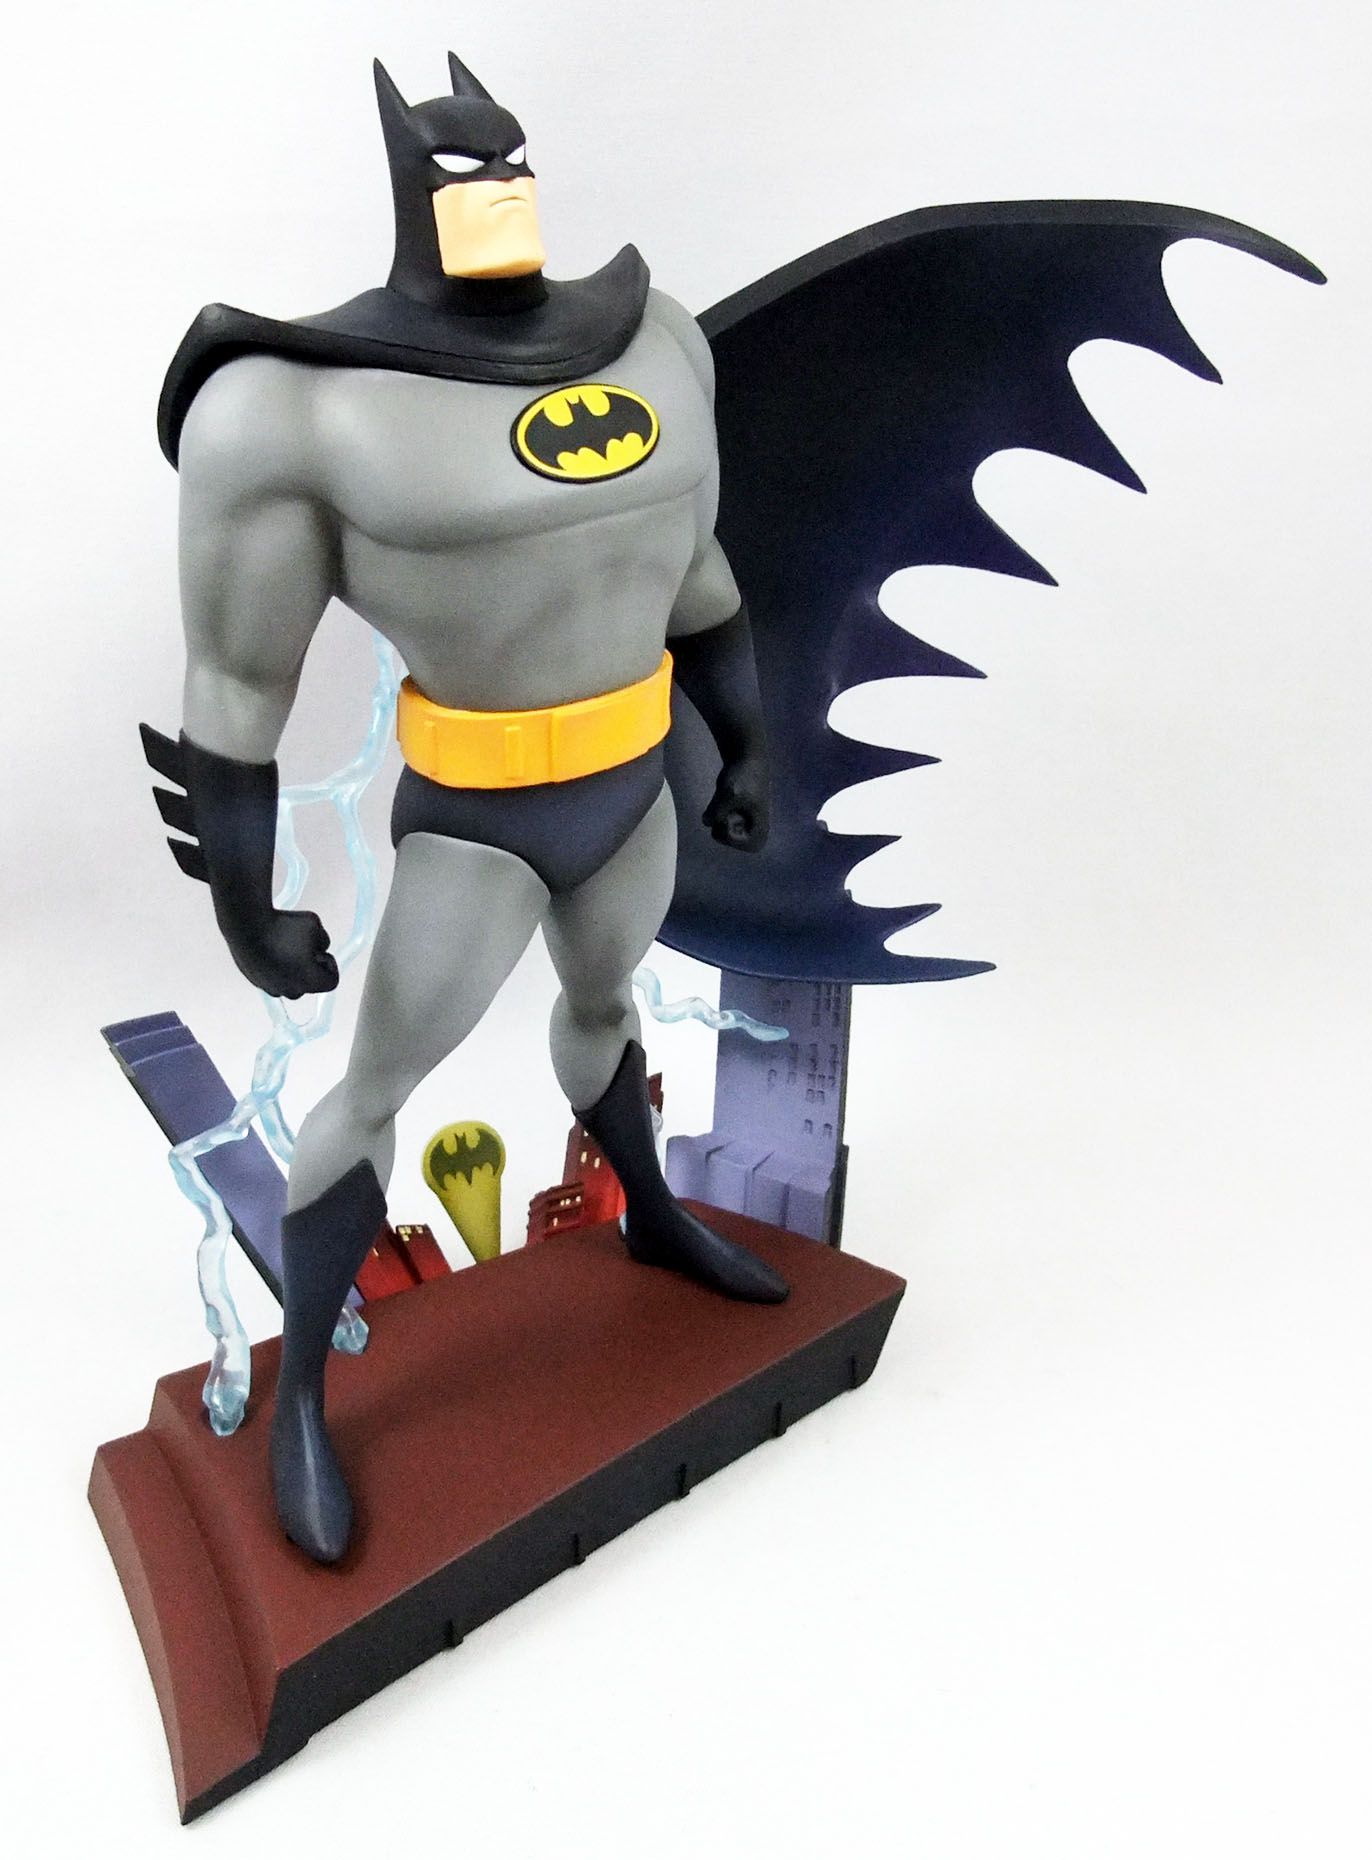 Batman The Animated Series - Batman 